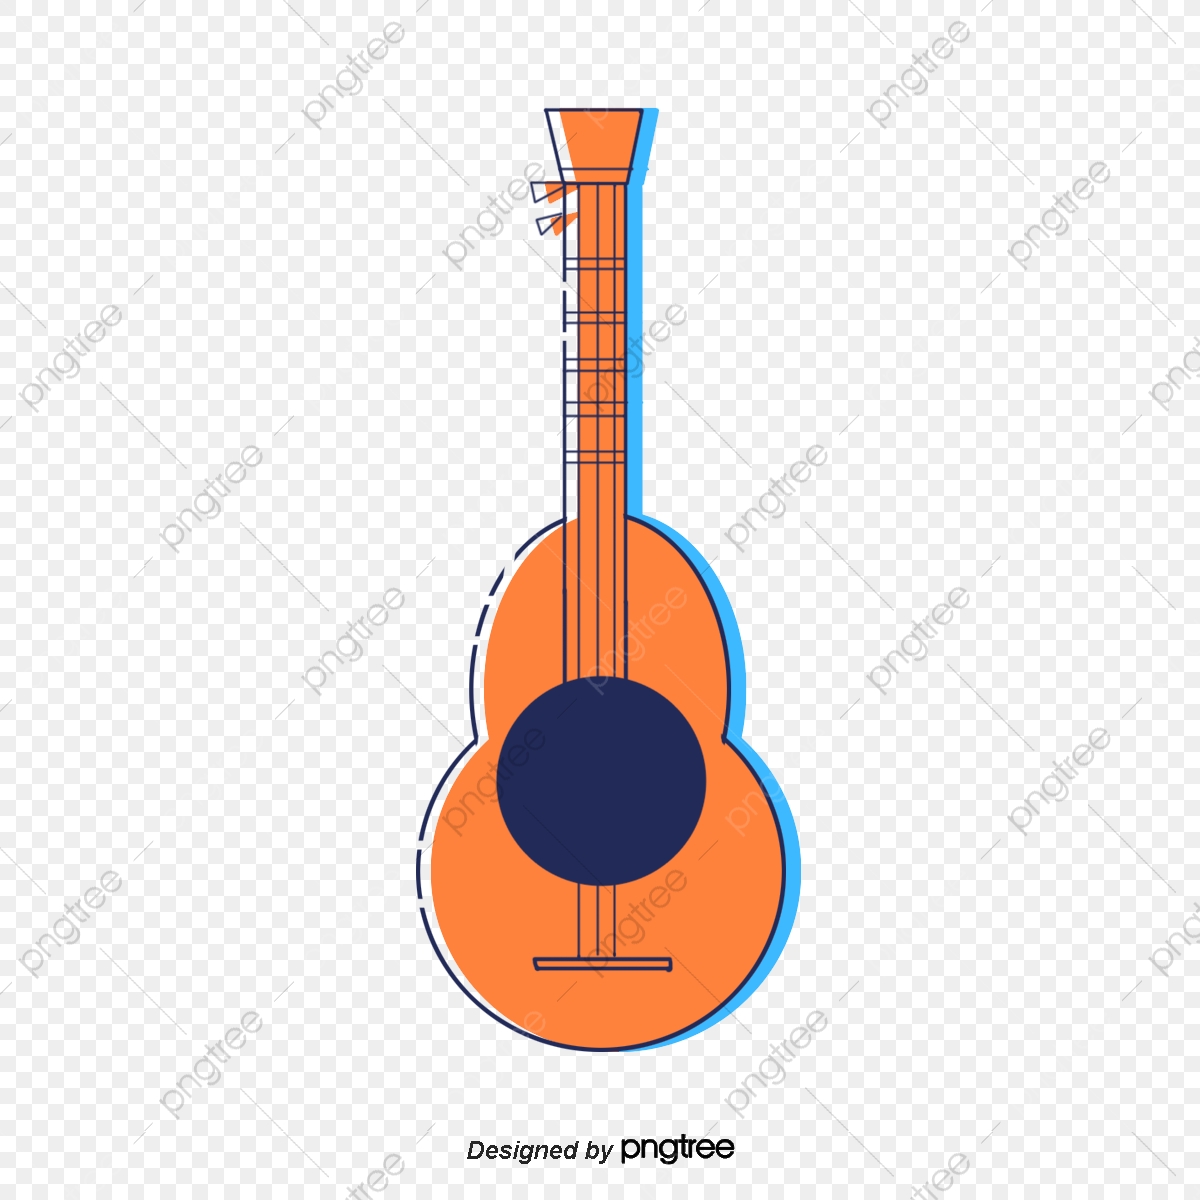 Cartoon mbe style elements. Clipart guitar orange guitar